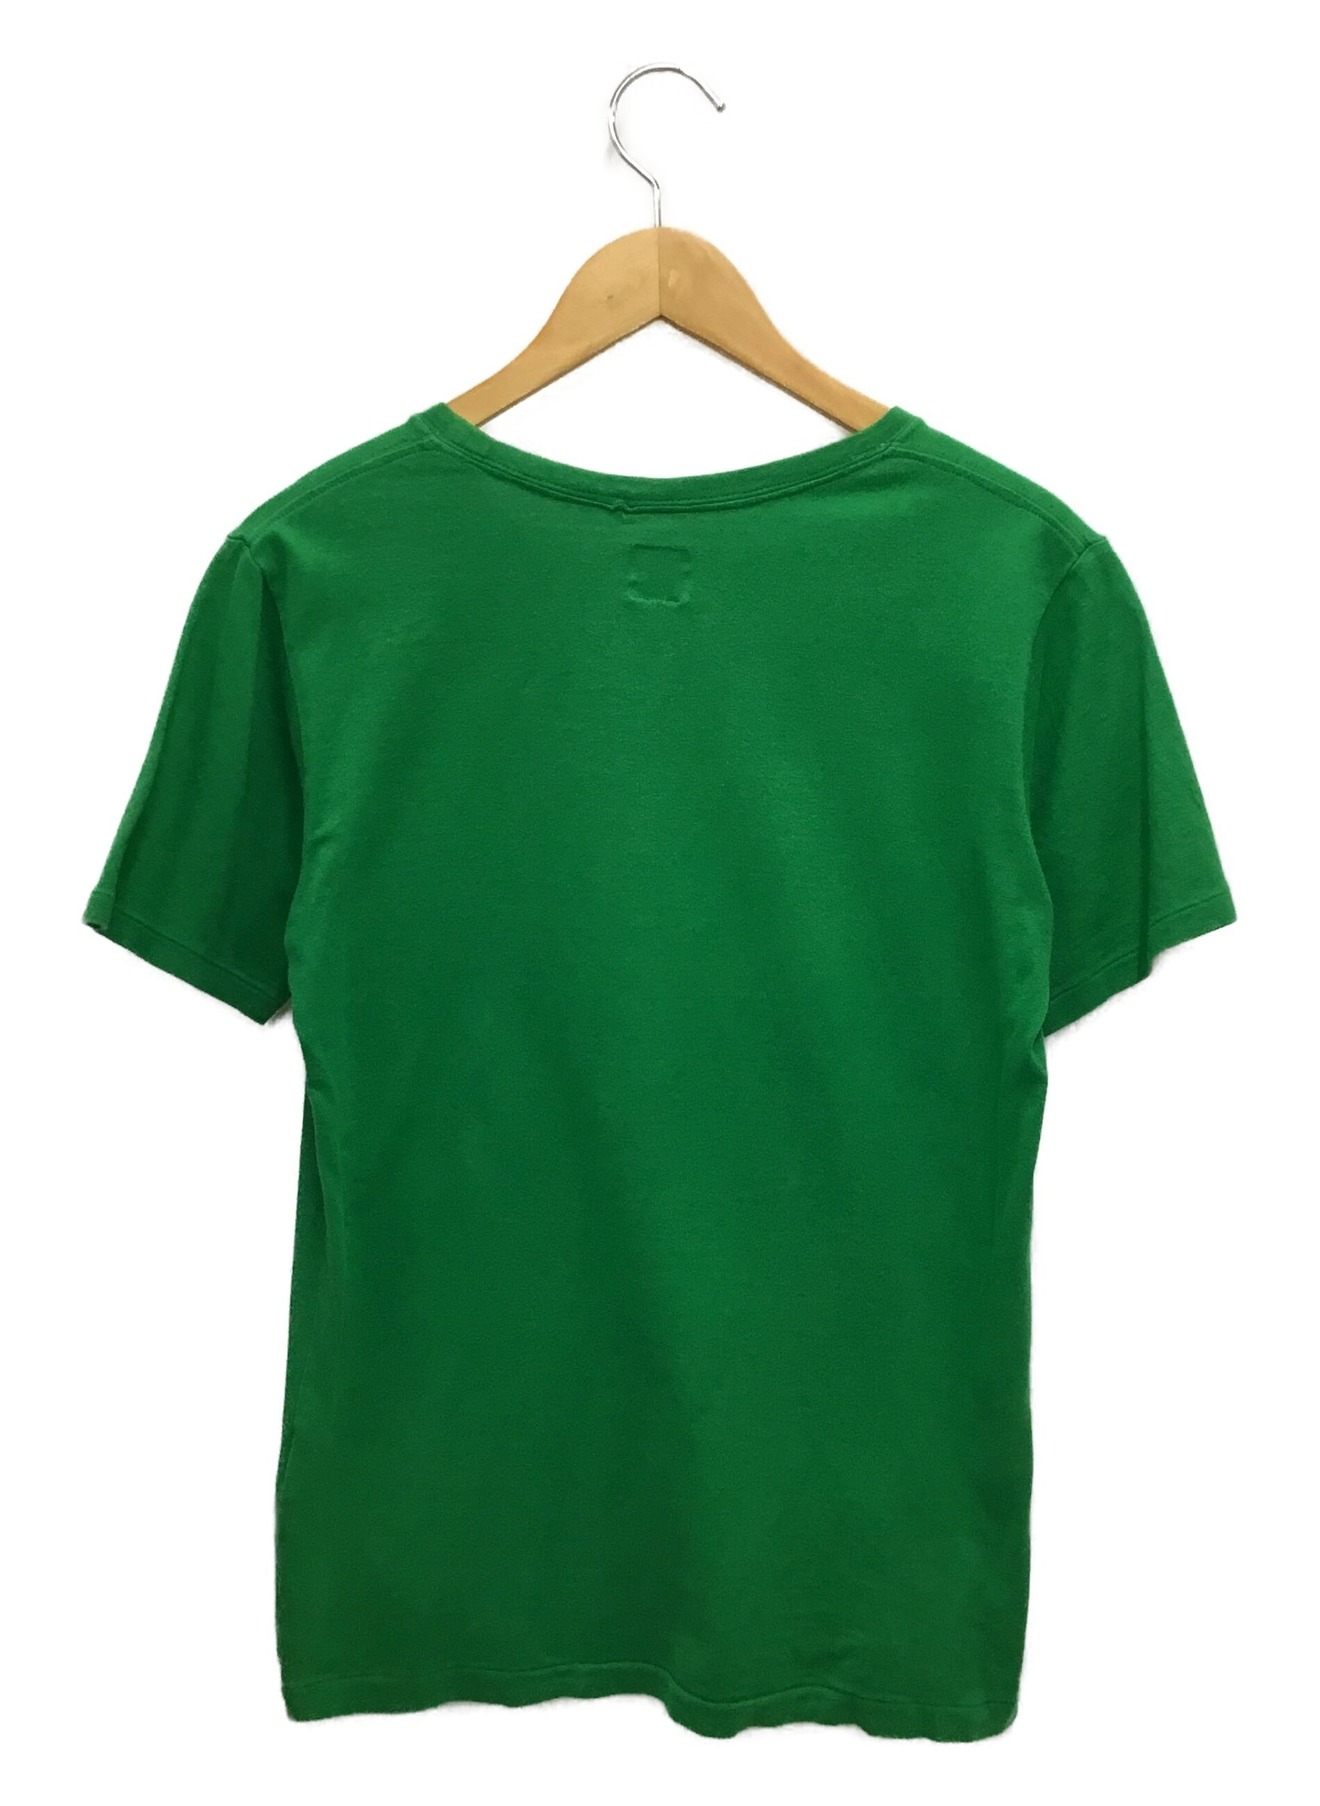 SASQUATCHfabrix. (サスクワッチファブリックス) Tシャツ グリーン サイズ:S